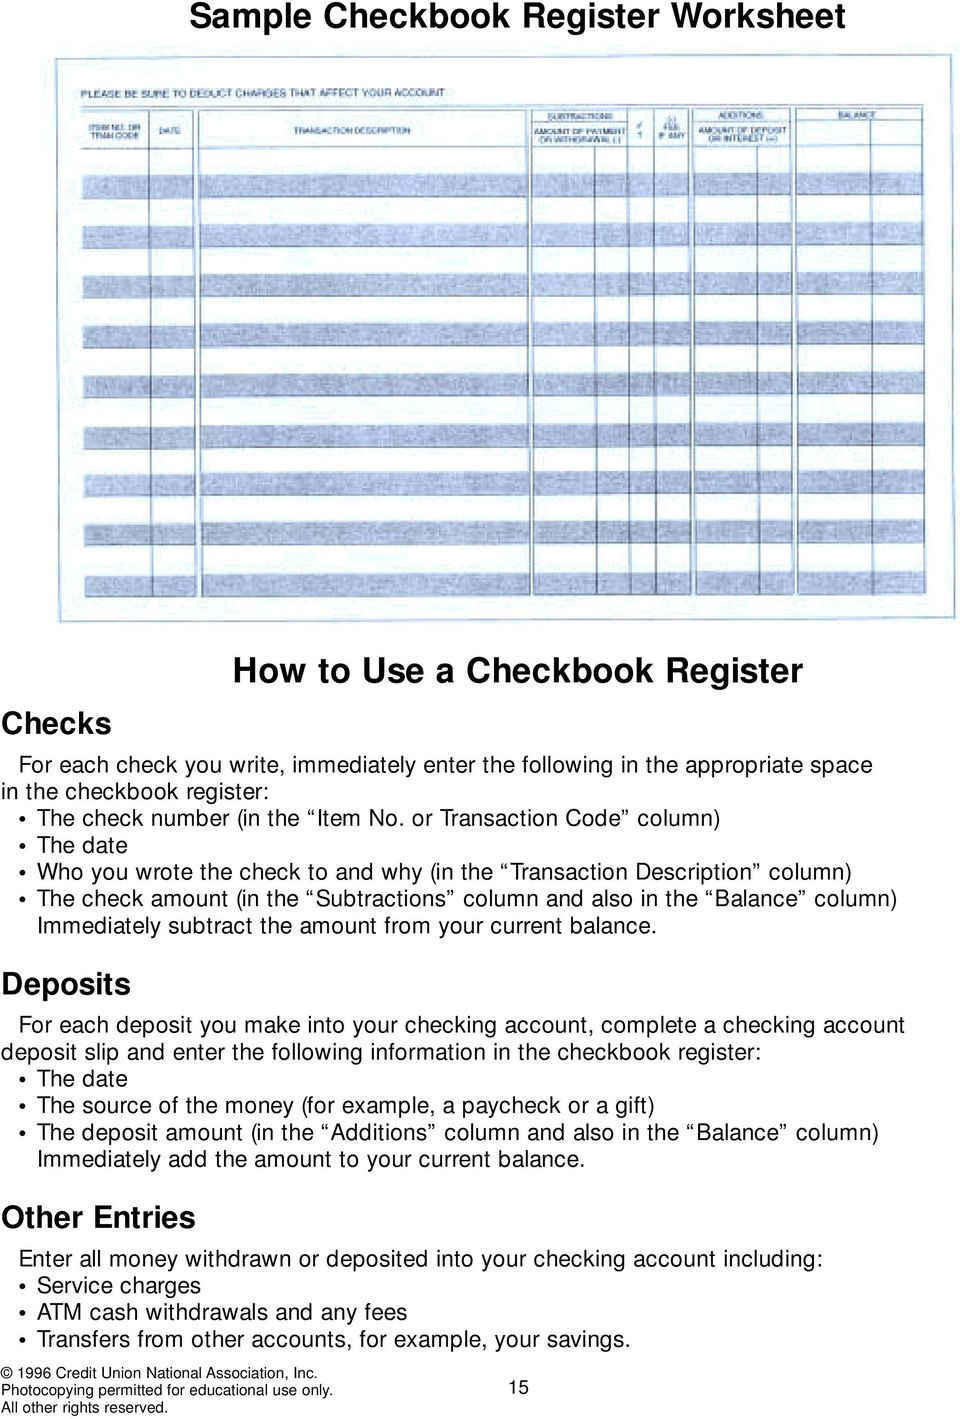 Checkbook Register Worksheet 1 Answers Draft Checking Account Basics Pdf Free Download